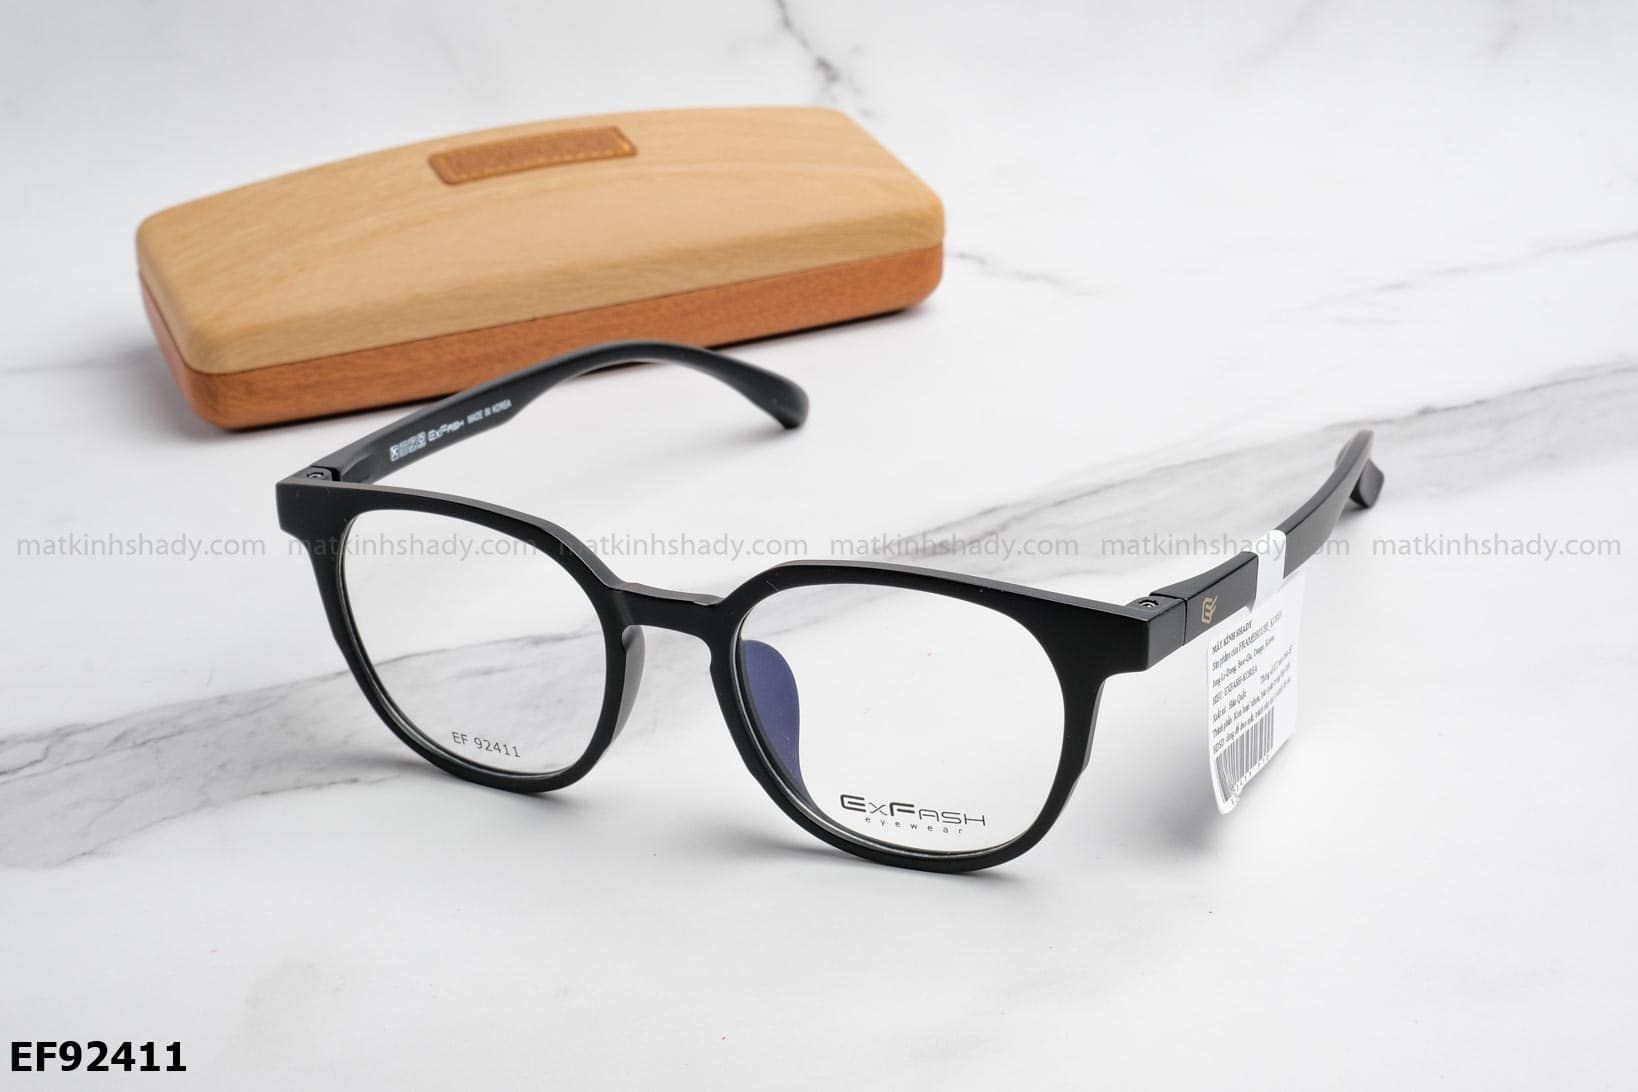  Exfash Eyewear - Glasses - EF92411 